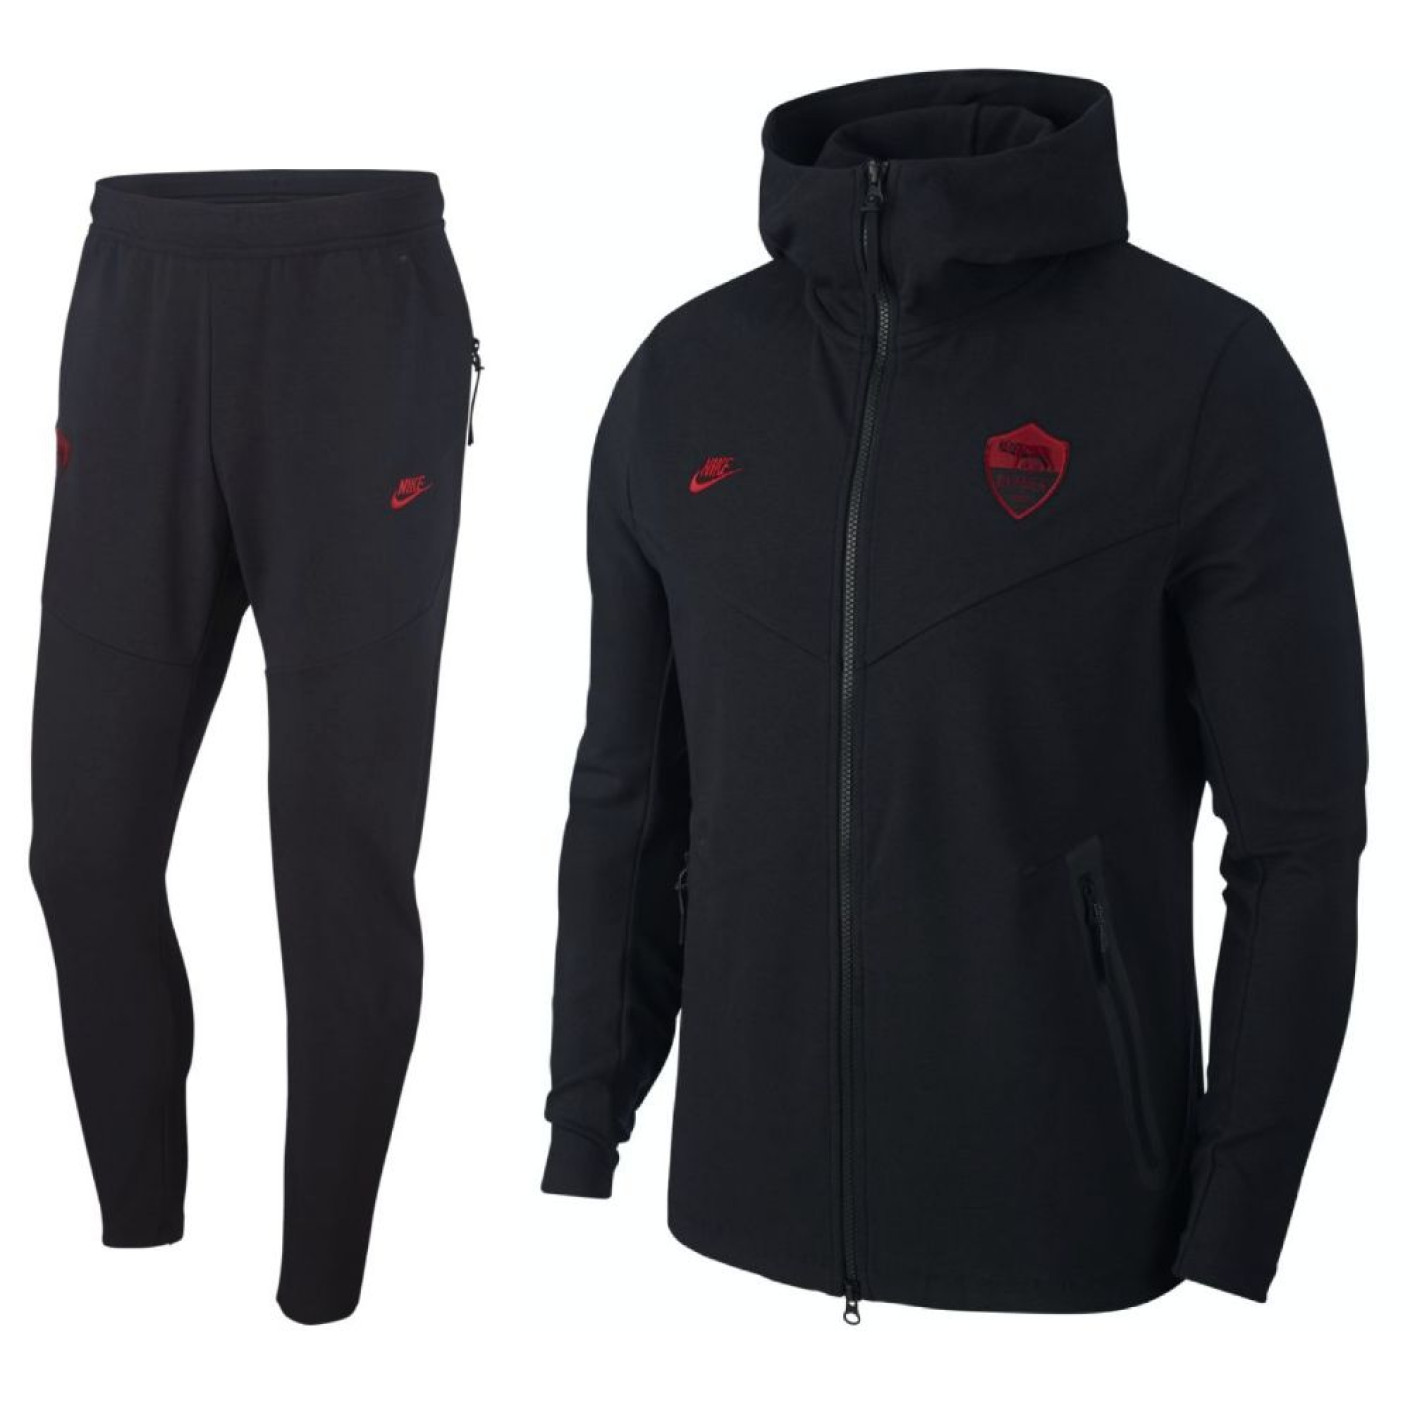 Nike AS Roma Tech Fleece Pack Trainingspak 2019-2020 Zwart Rood